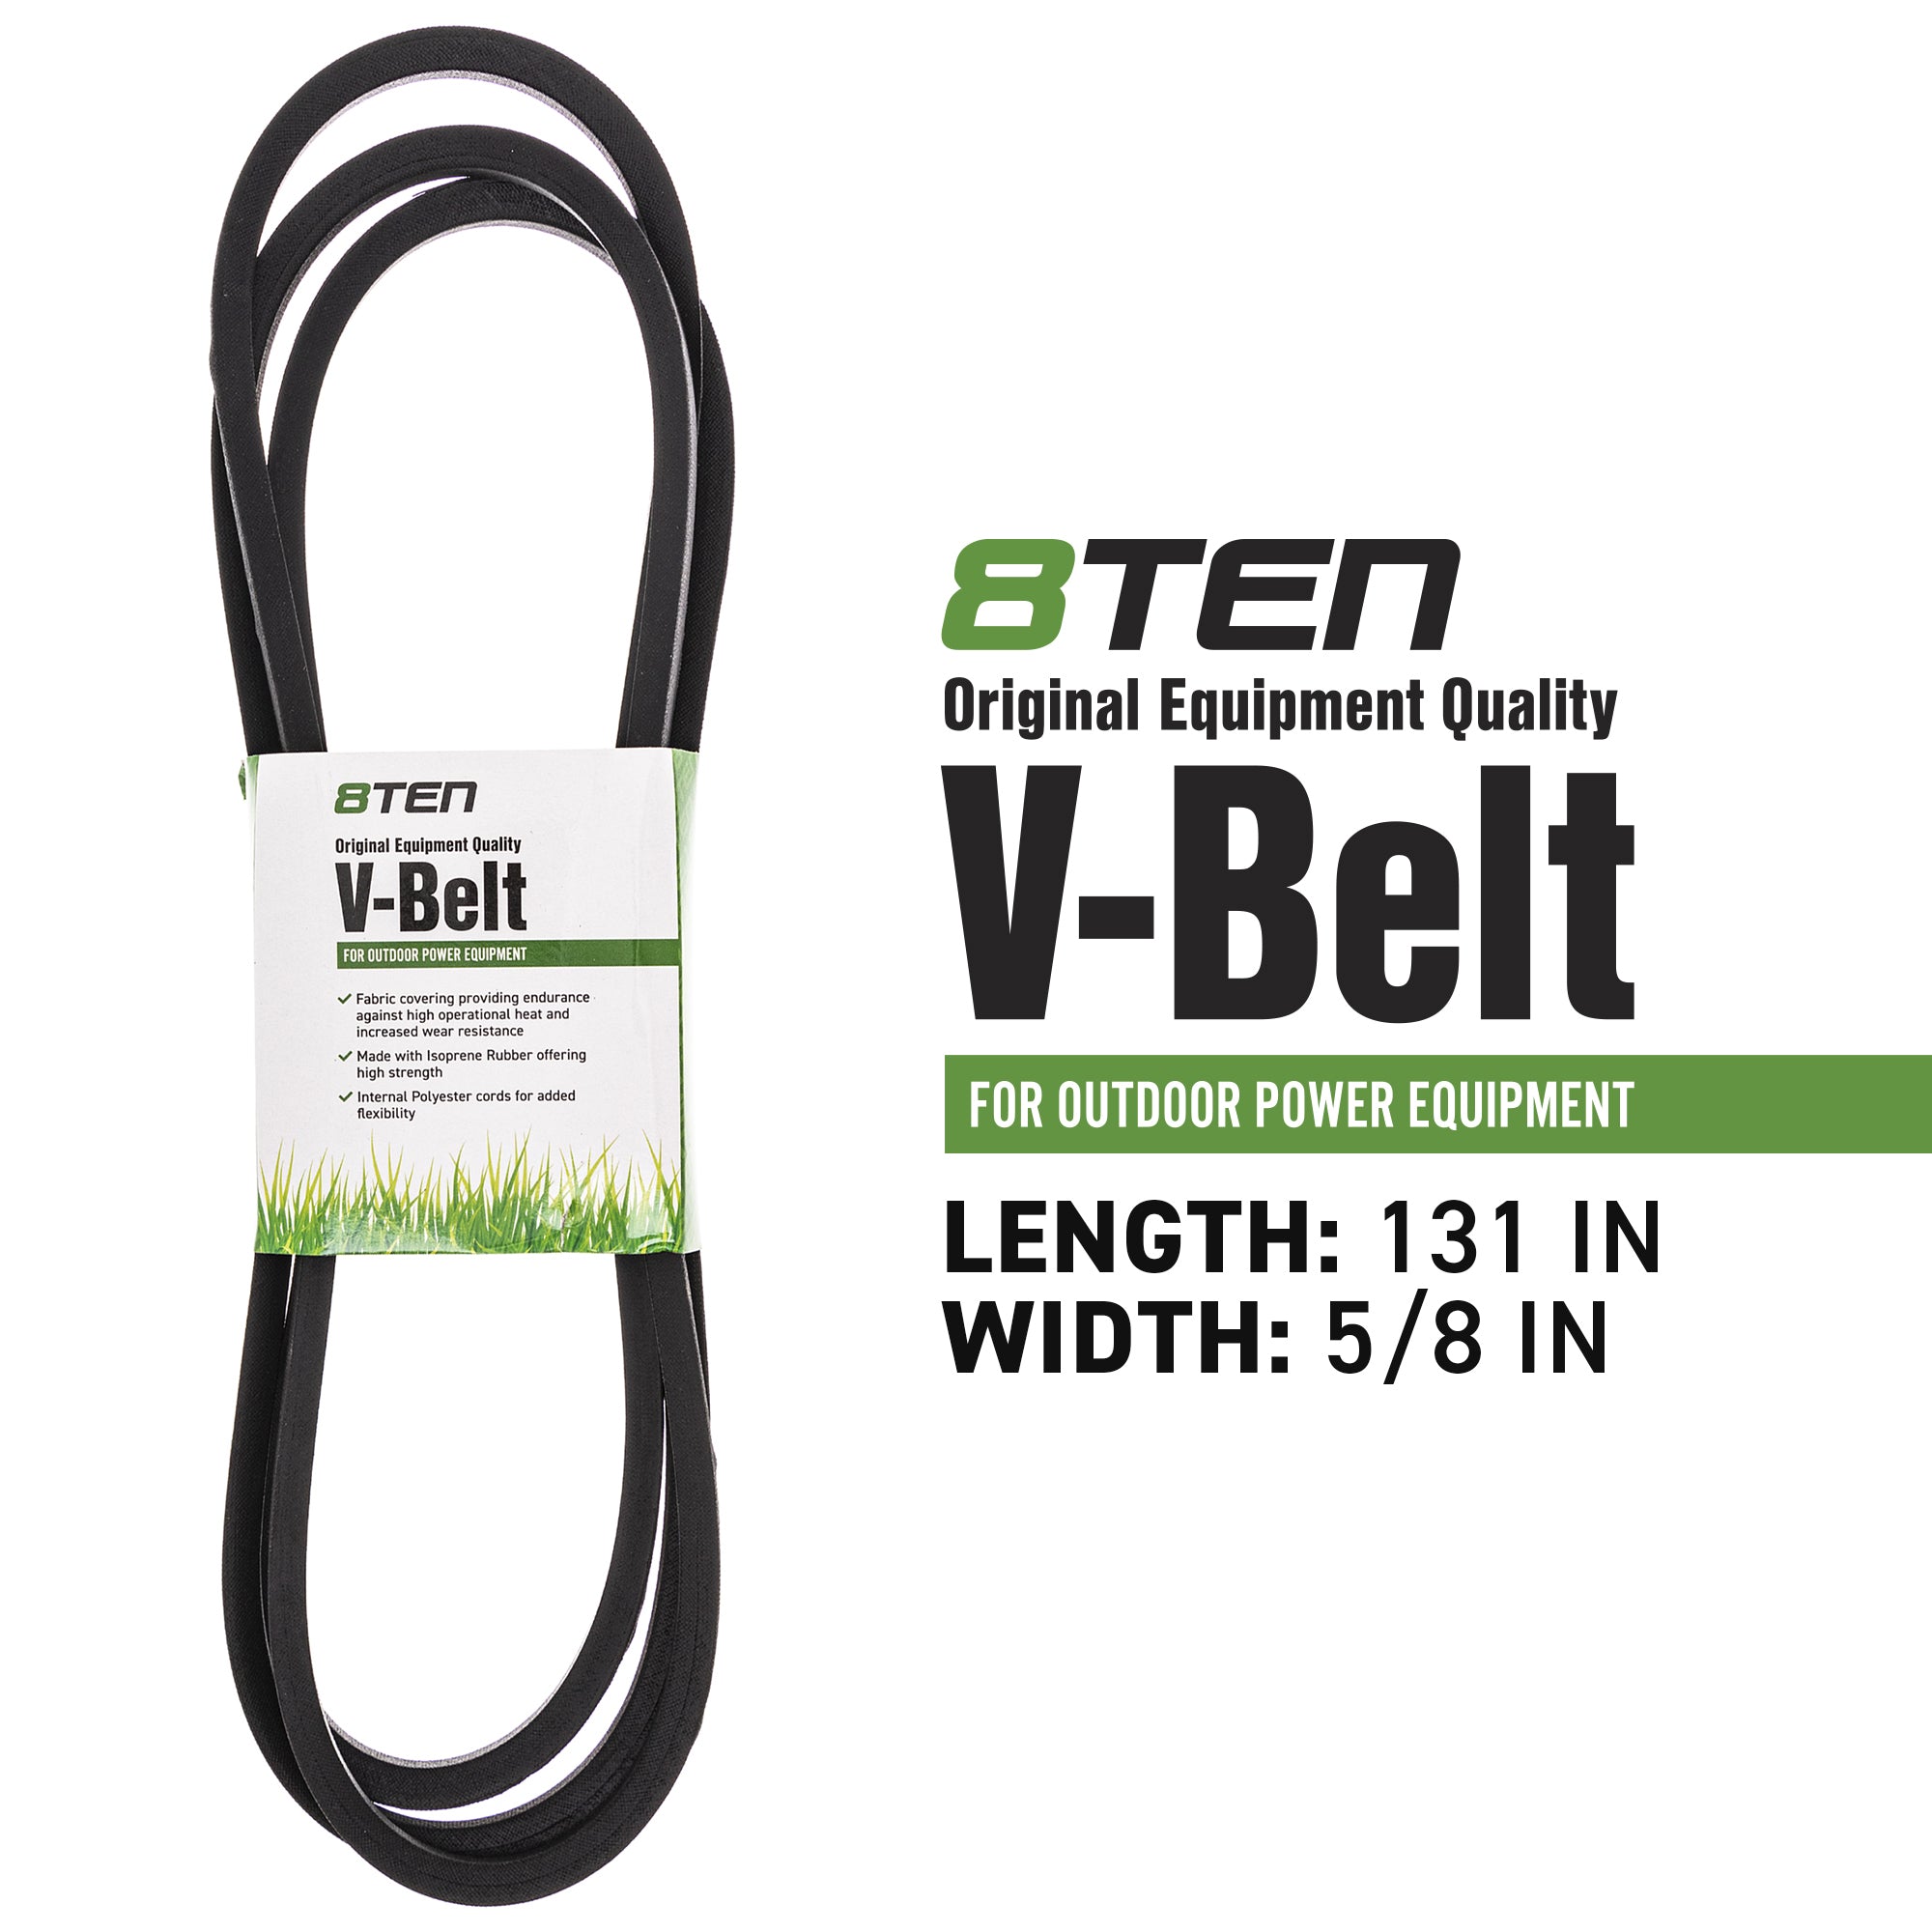 8TEN MK1006355 Clutch Belt Kit for Xtreme Warner Stens Oregon MTD